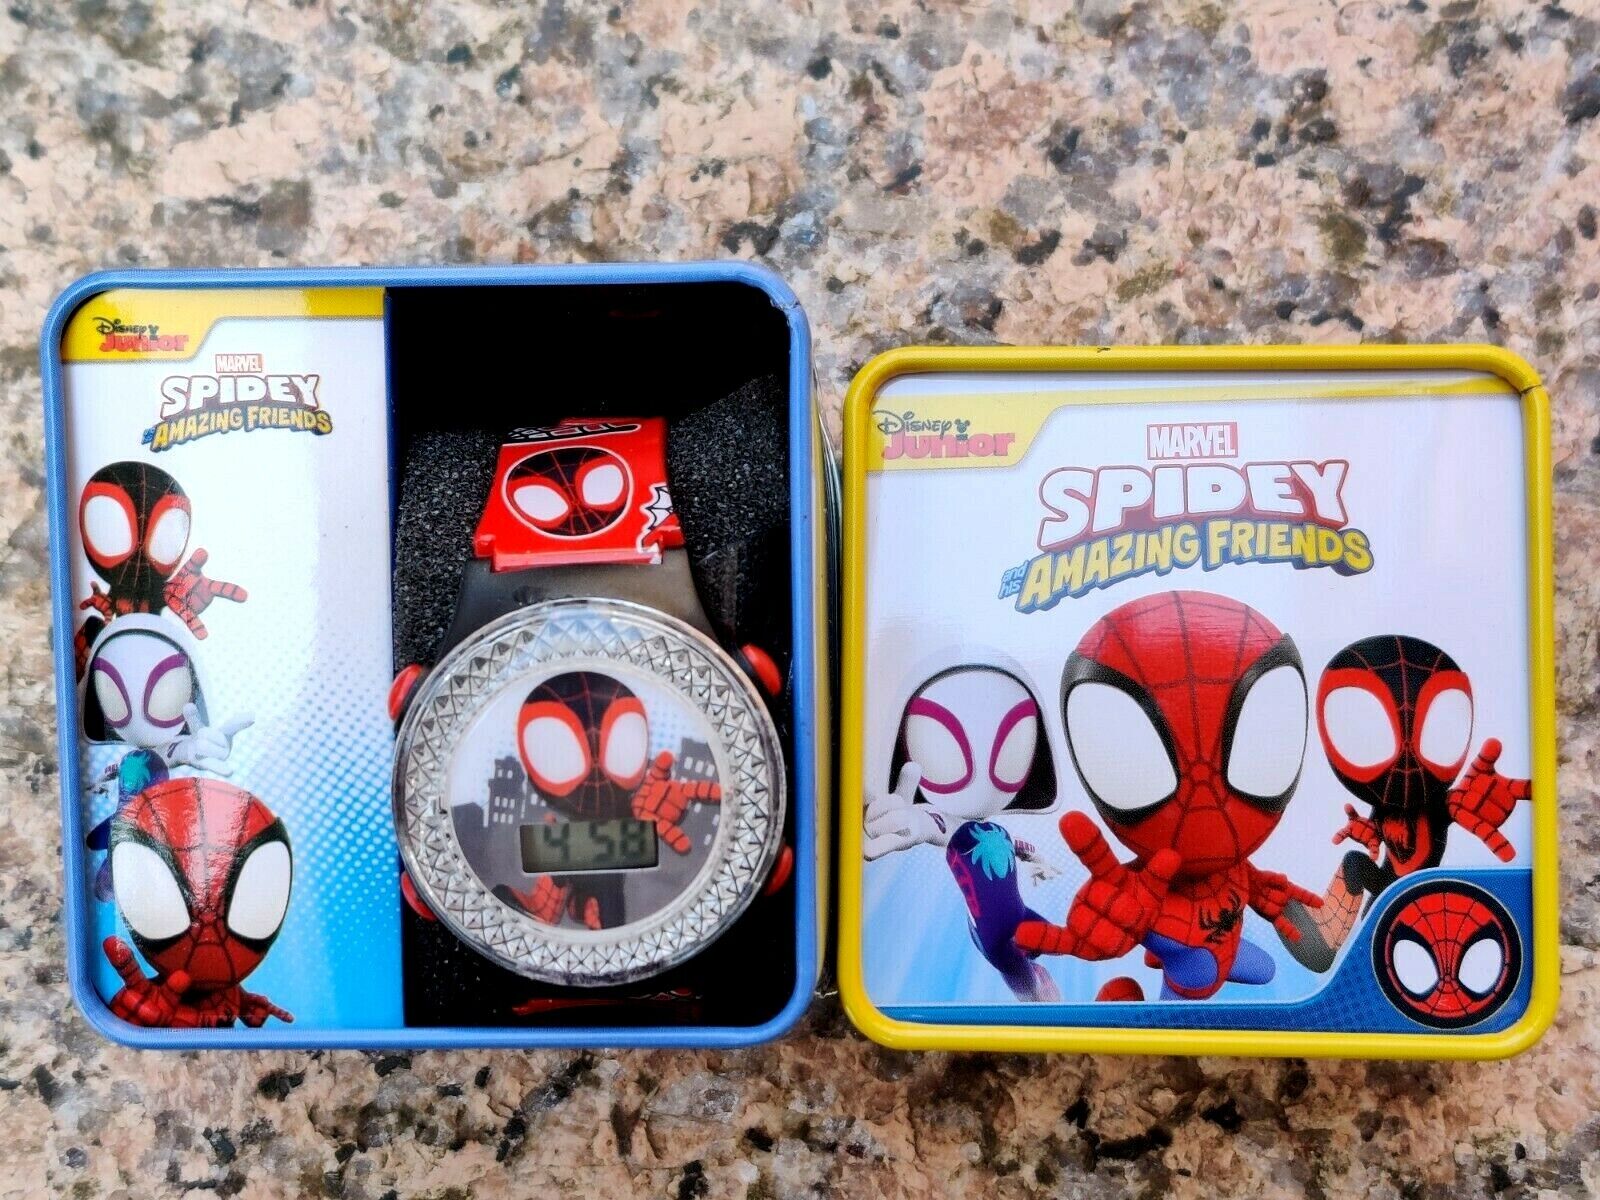 Spidey Amazing Friends Spiderman Watch Digital Marvel Superhero Gift Kids Boys